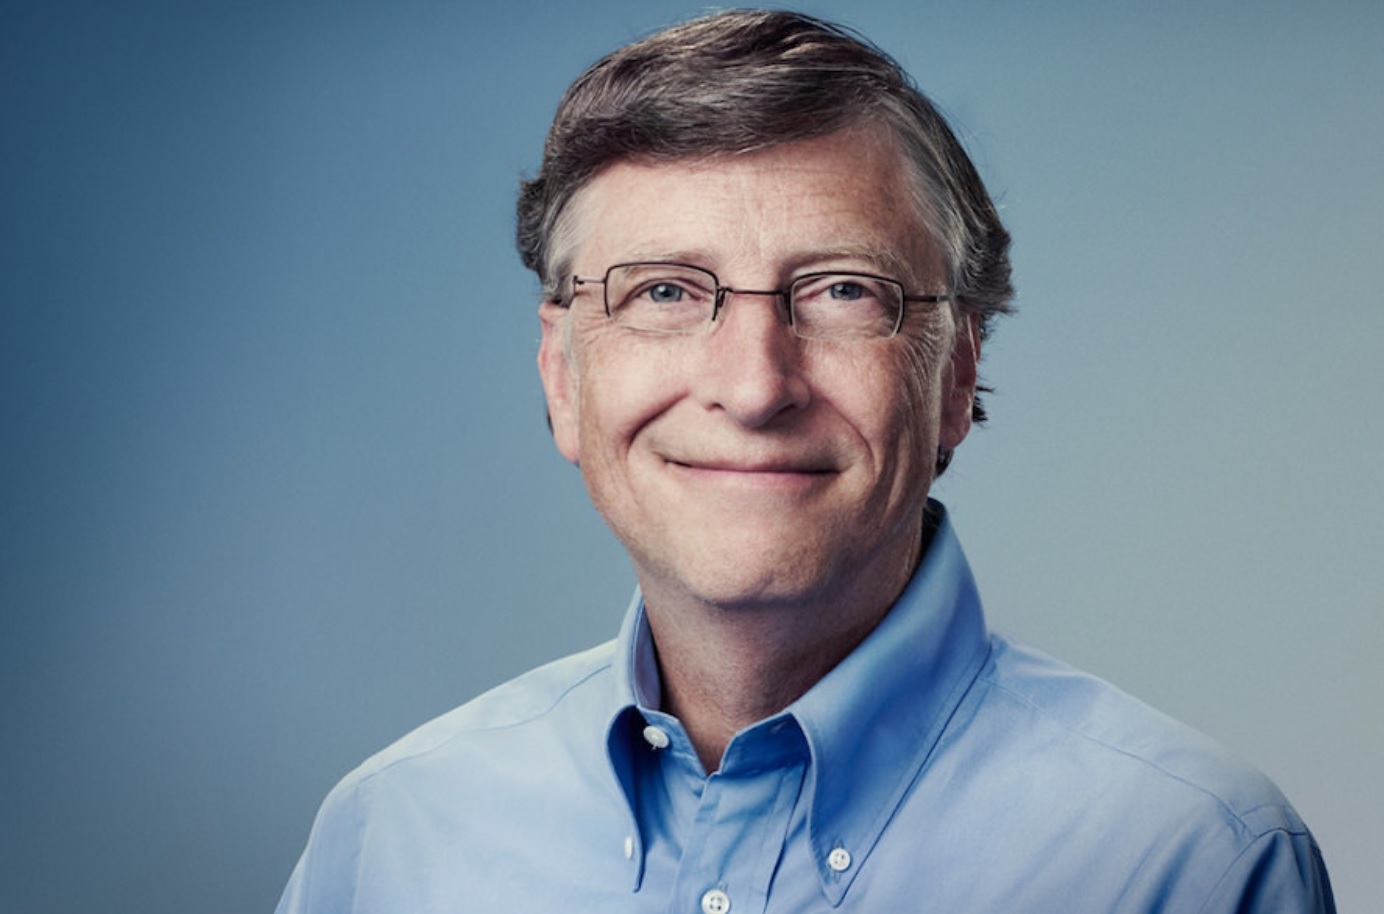 Bill Gates visits Microsoft's India Development Center in Hyderabad